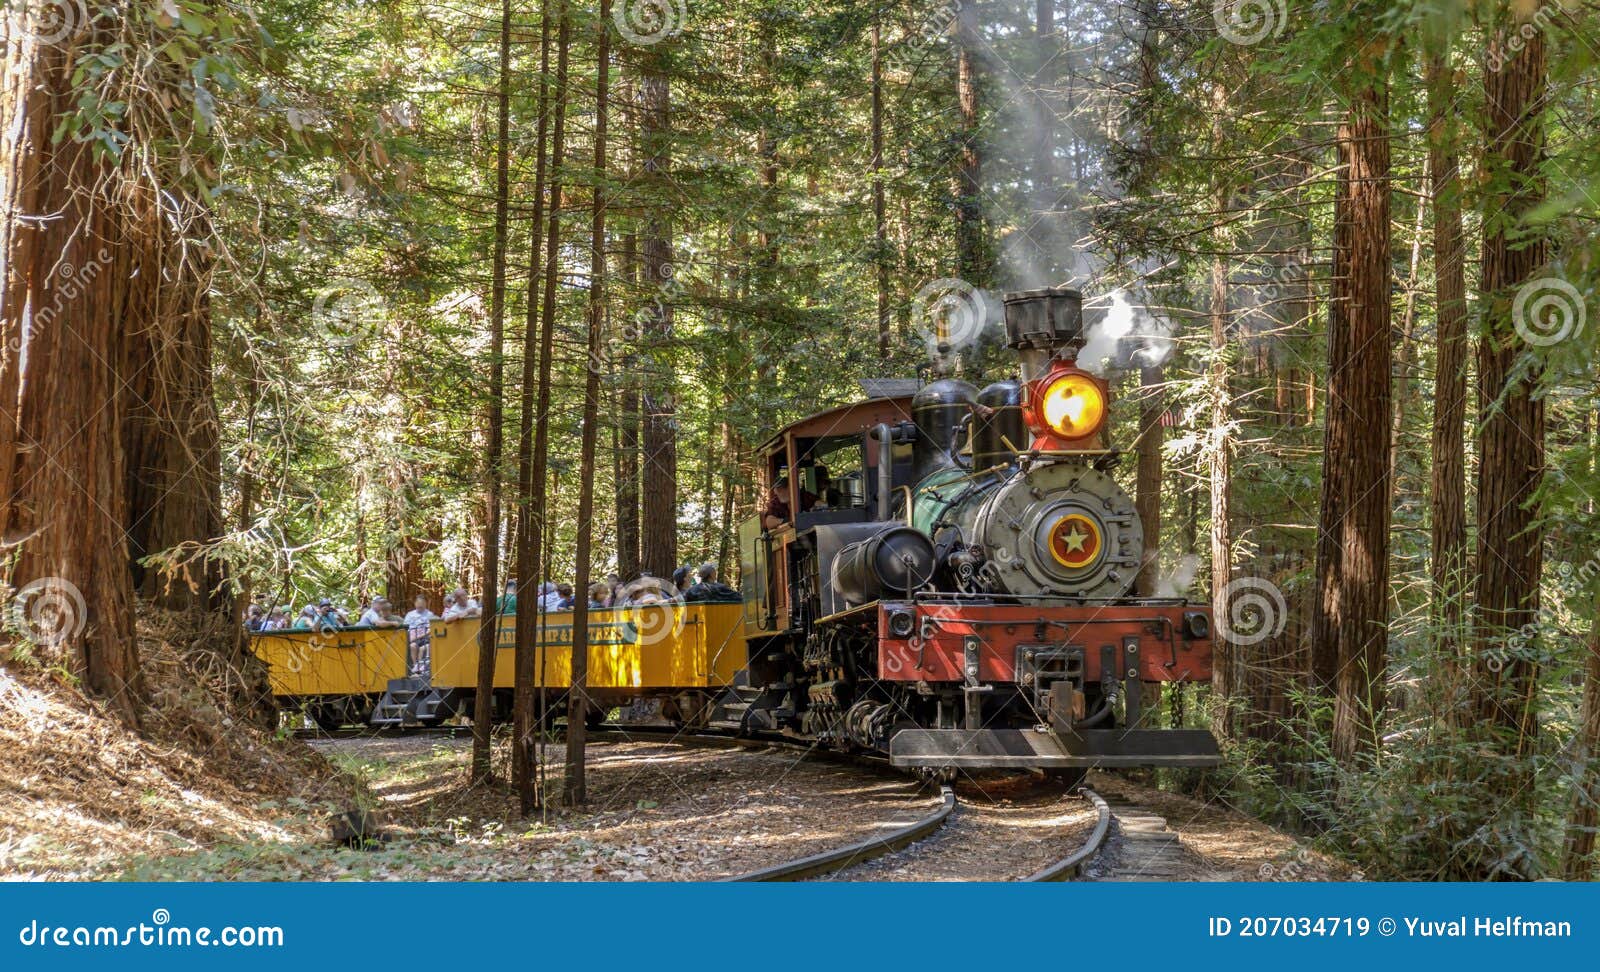 roaring camp` dixiana shay steam train crossing redwoods in santa cruz mountains